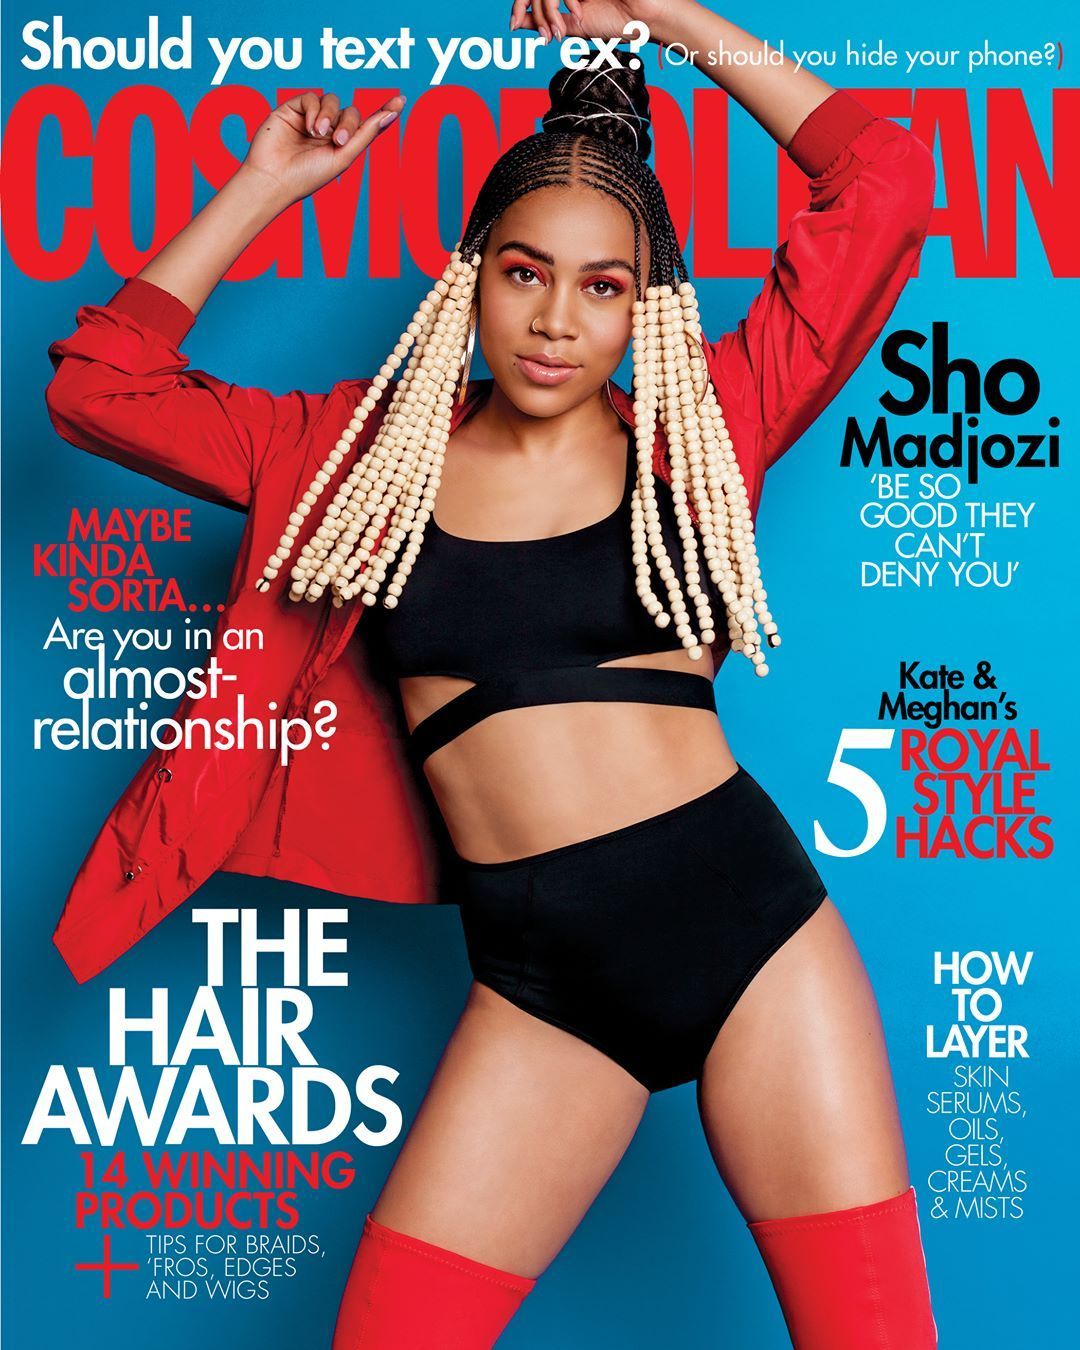 Sho Madjozi killed the appearance on cosmopolitan magazine cover